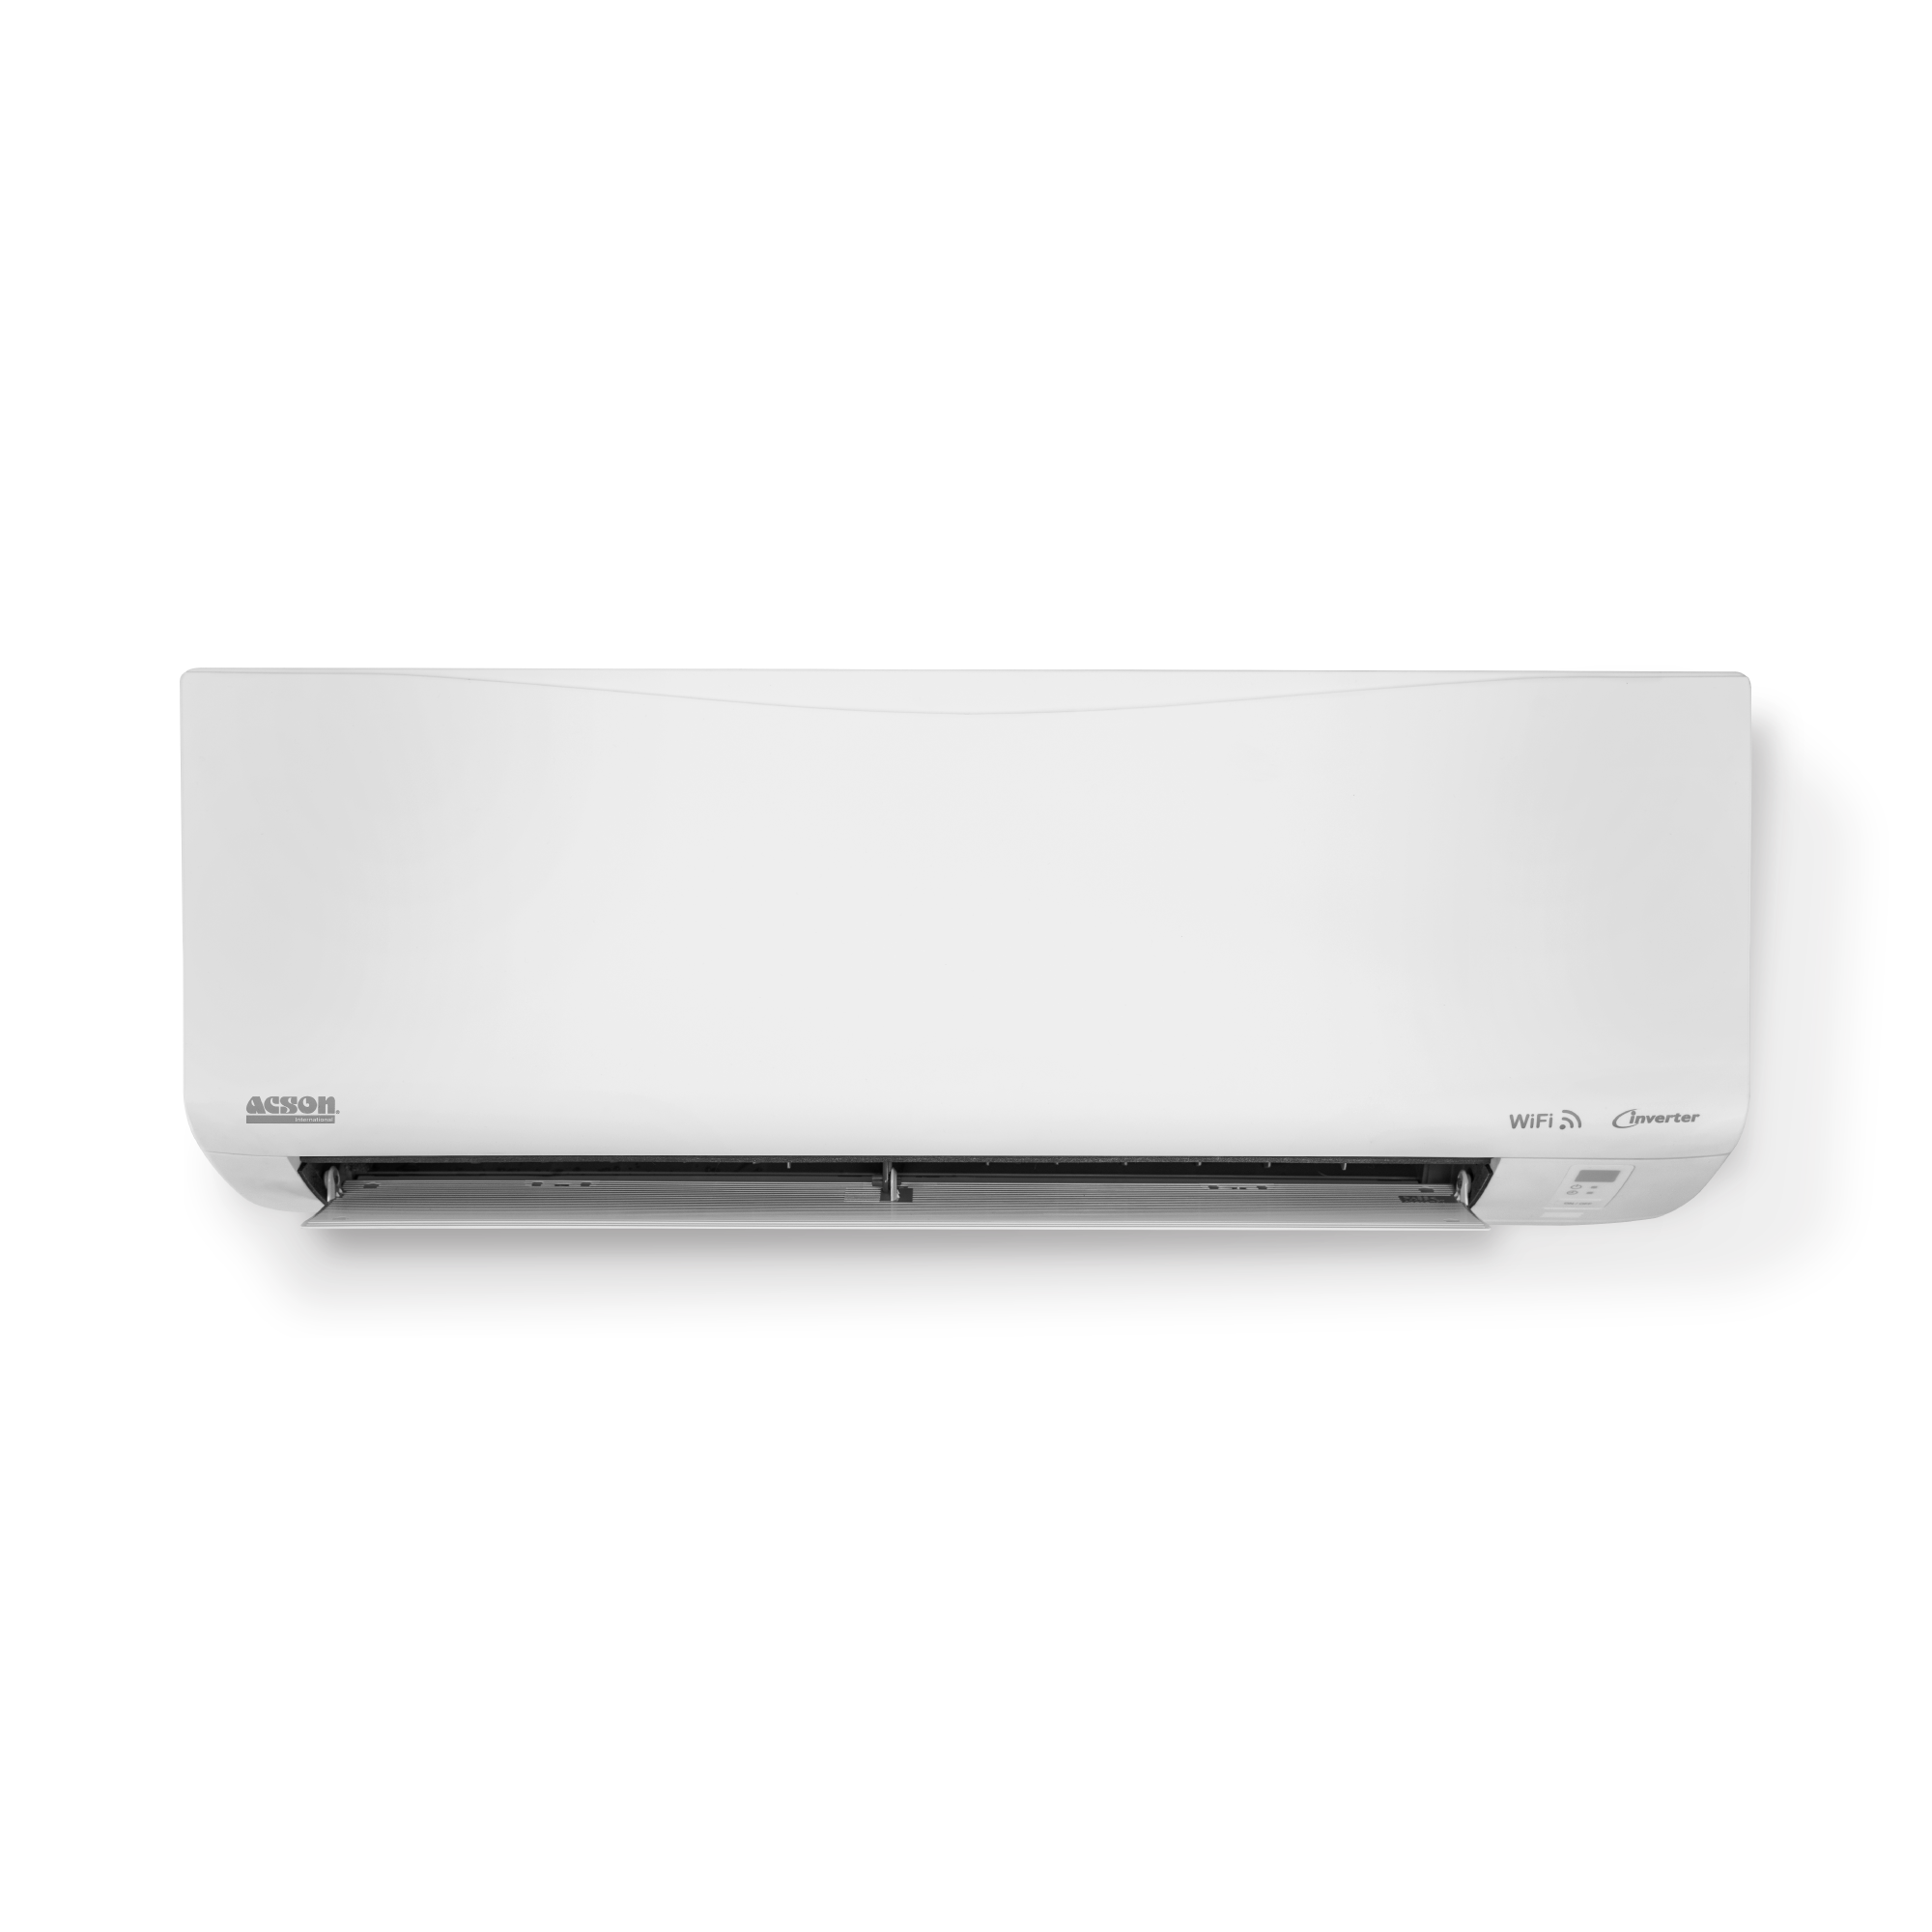 REINO Inverter (1.0HP) Air Conditioner R32 WiFi